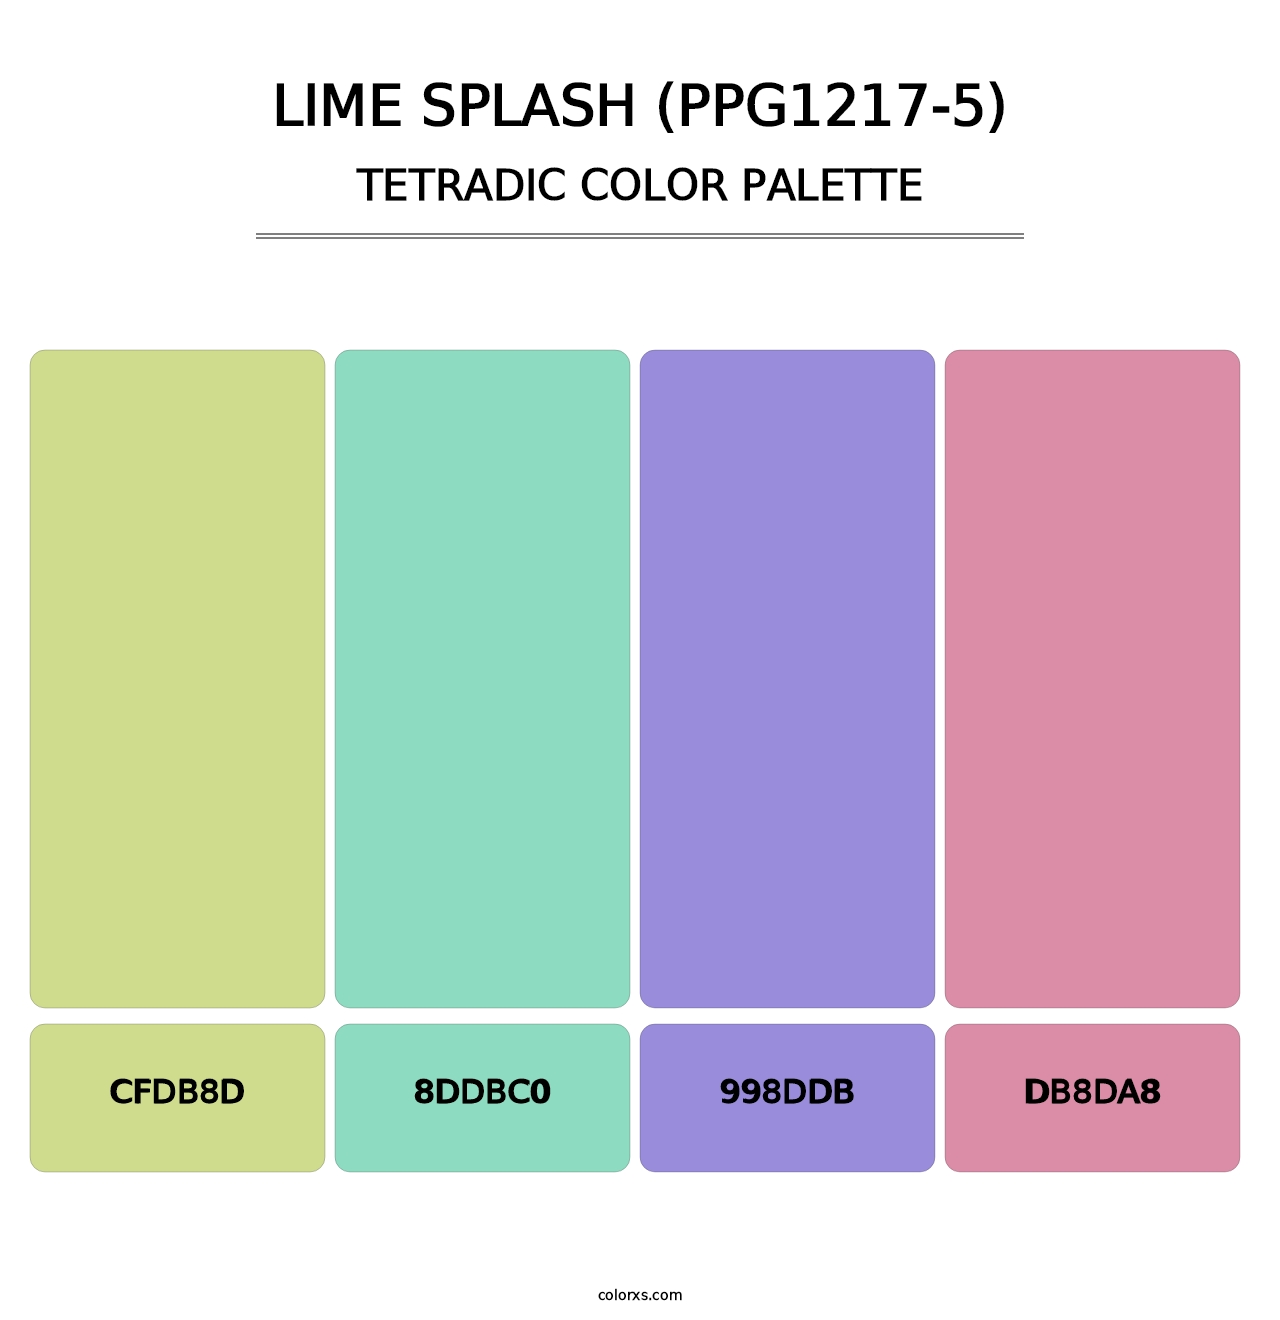 Lime Splash (PPG1217-5) - Tetradic Color Palette